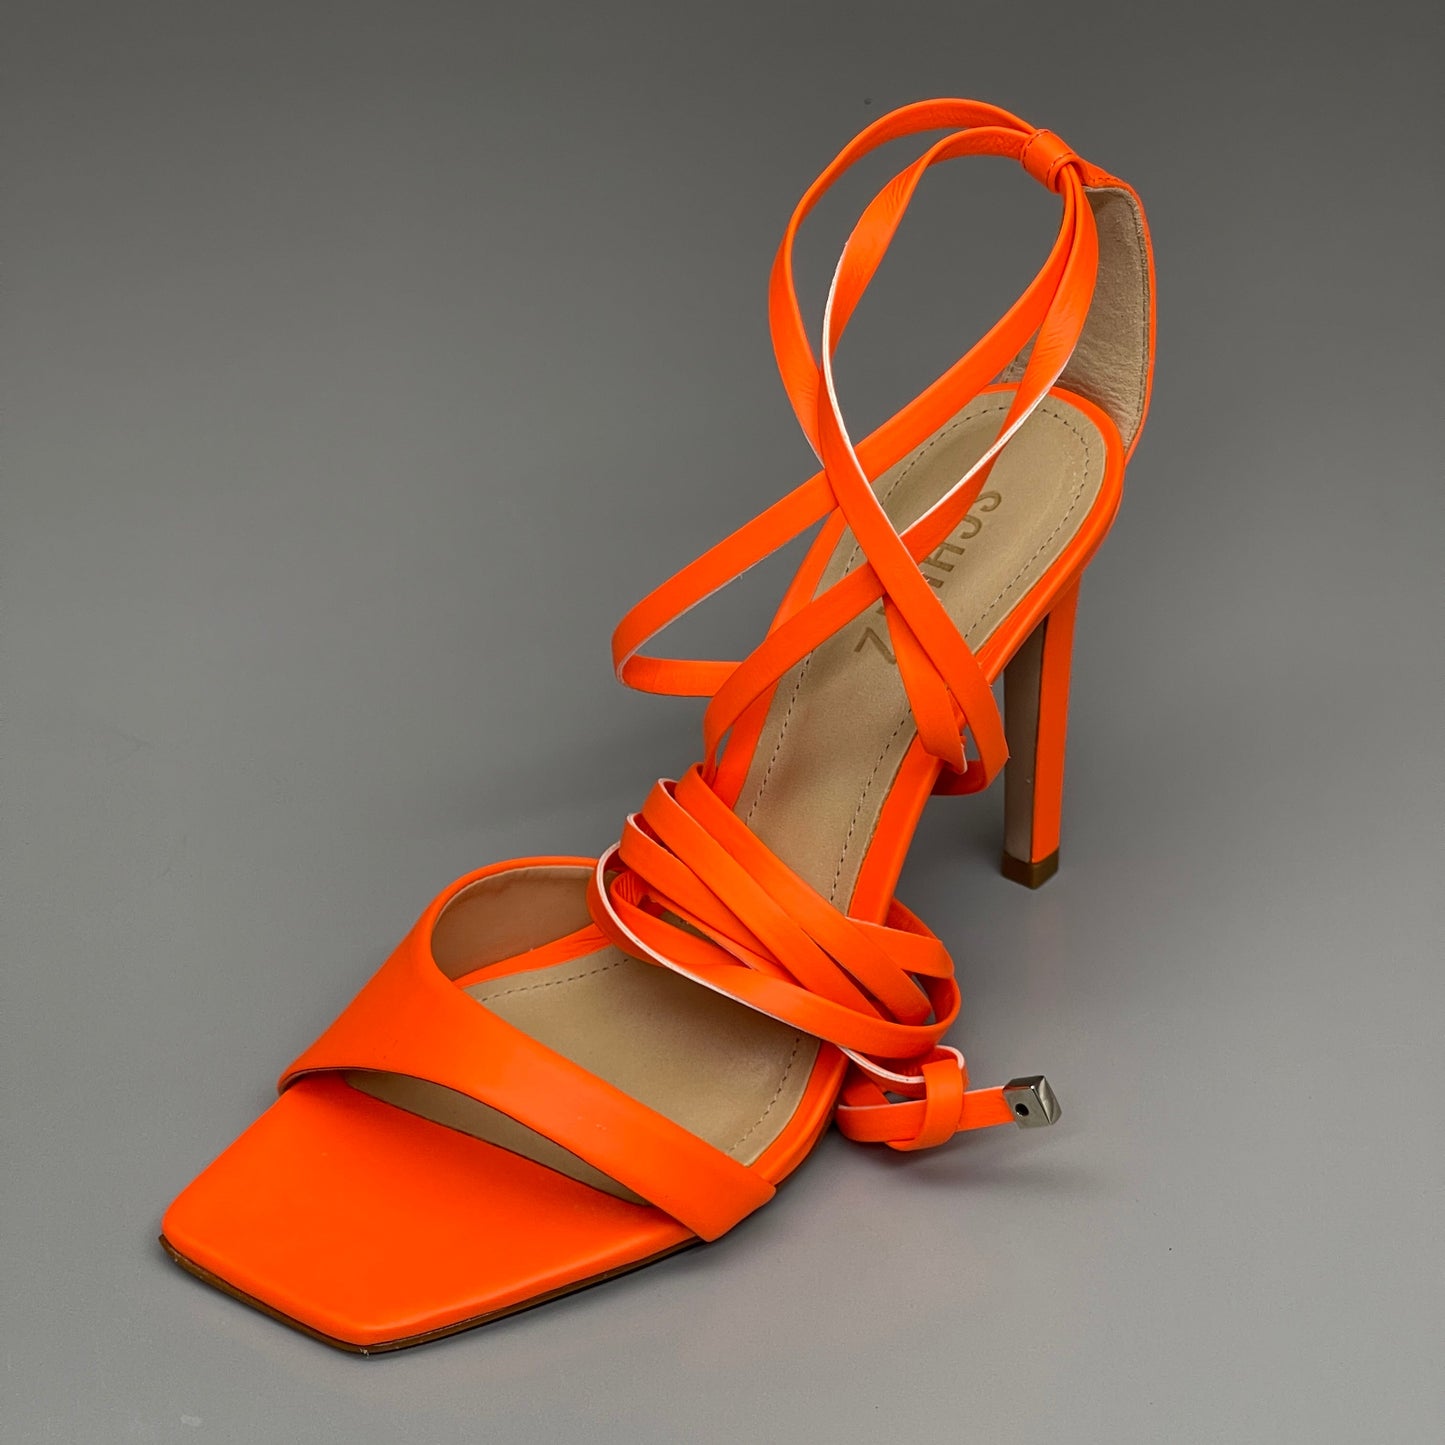 SCHUTZ Bryce Ankle Tie Women's High Heel Leather Strappy Sandal Acid Orange Sz 9.5 (New)